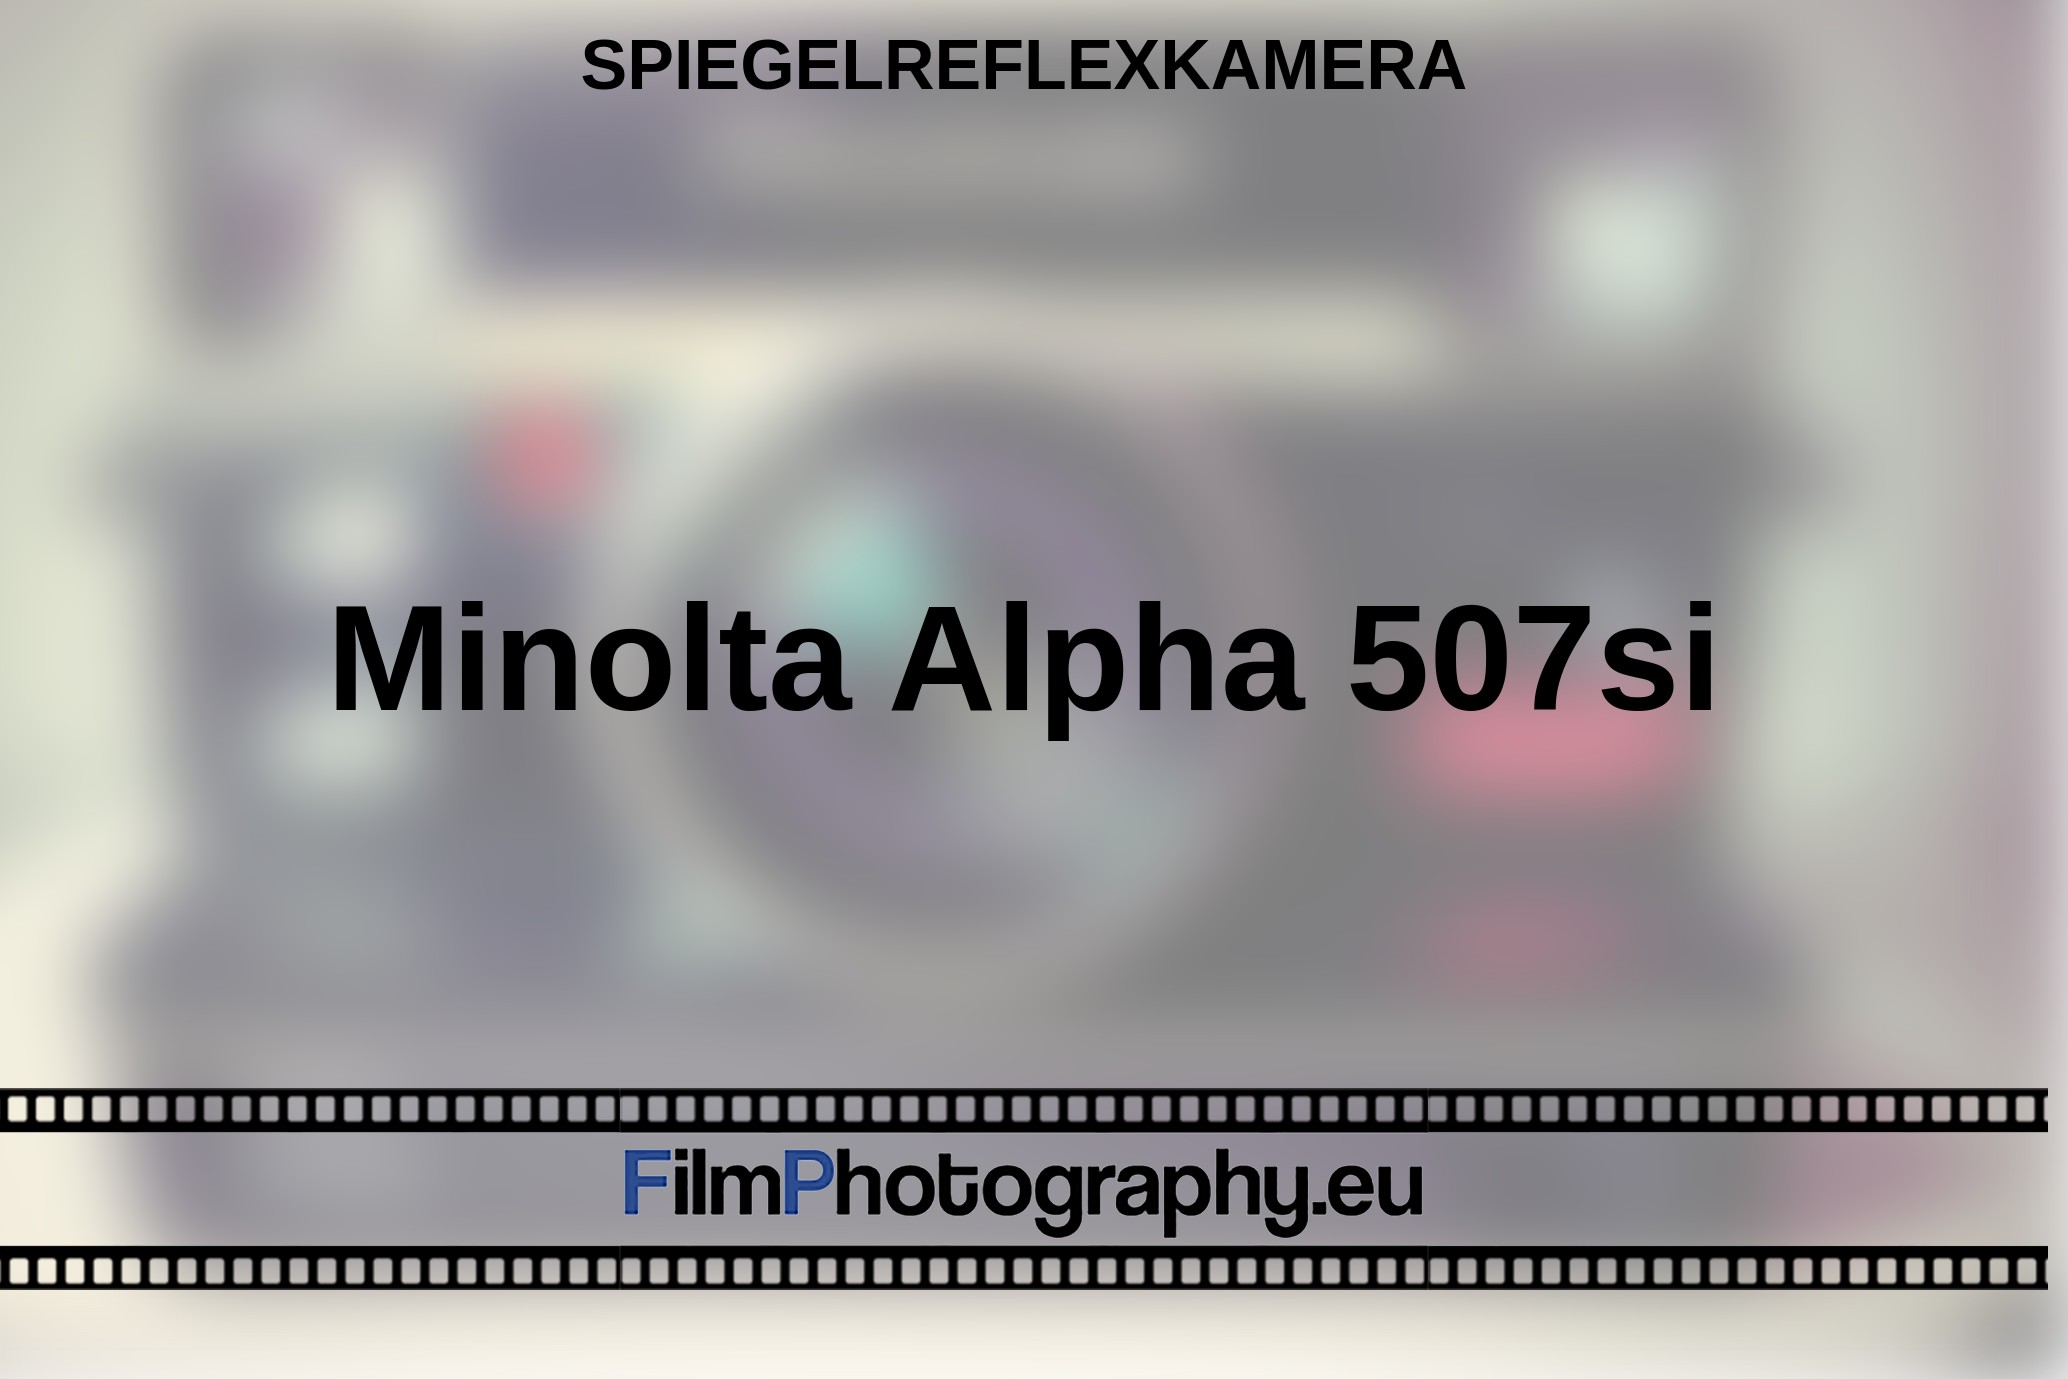 Minolta-Alpha-507si-Spiegelreflexkamera-bnv.jpg